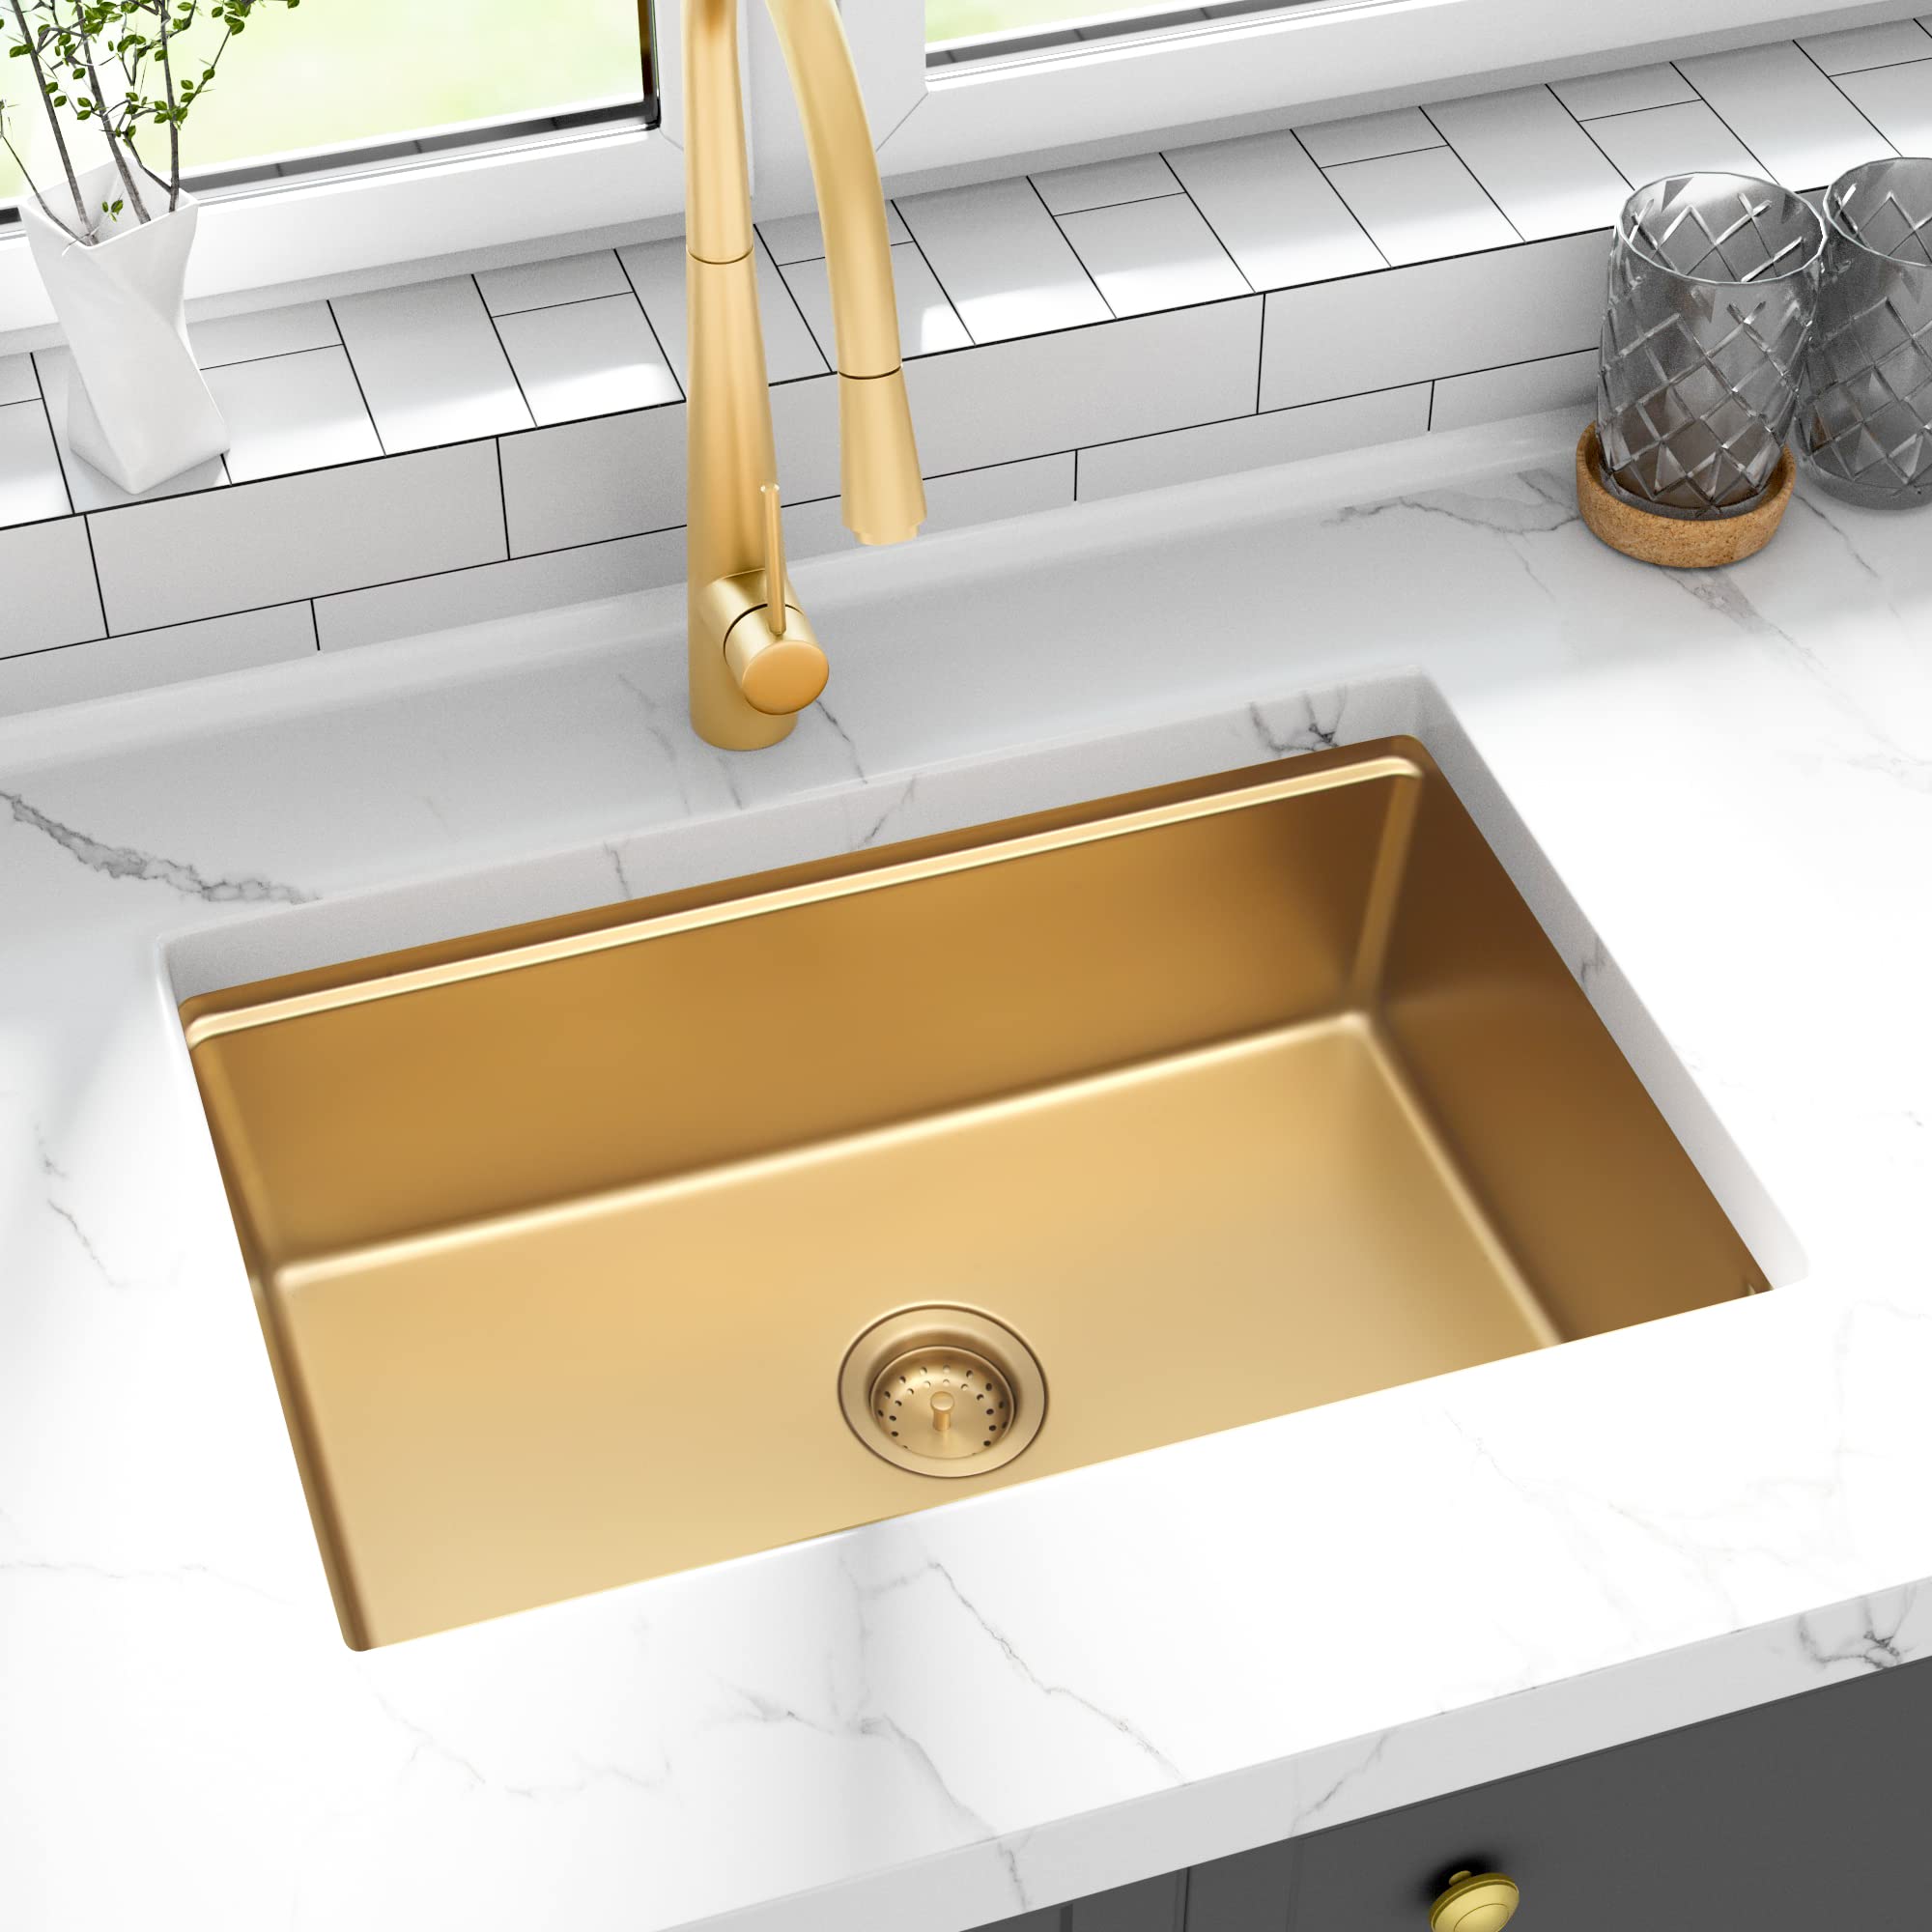 Aquacubic cUPC PVD Nano Luxury Golden 304 Edelstahl Single Bowl Undermount Handmade Kitchen Sink with Ledge